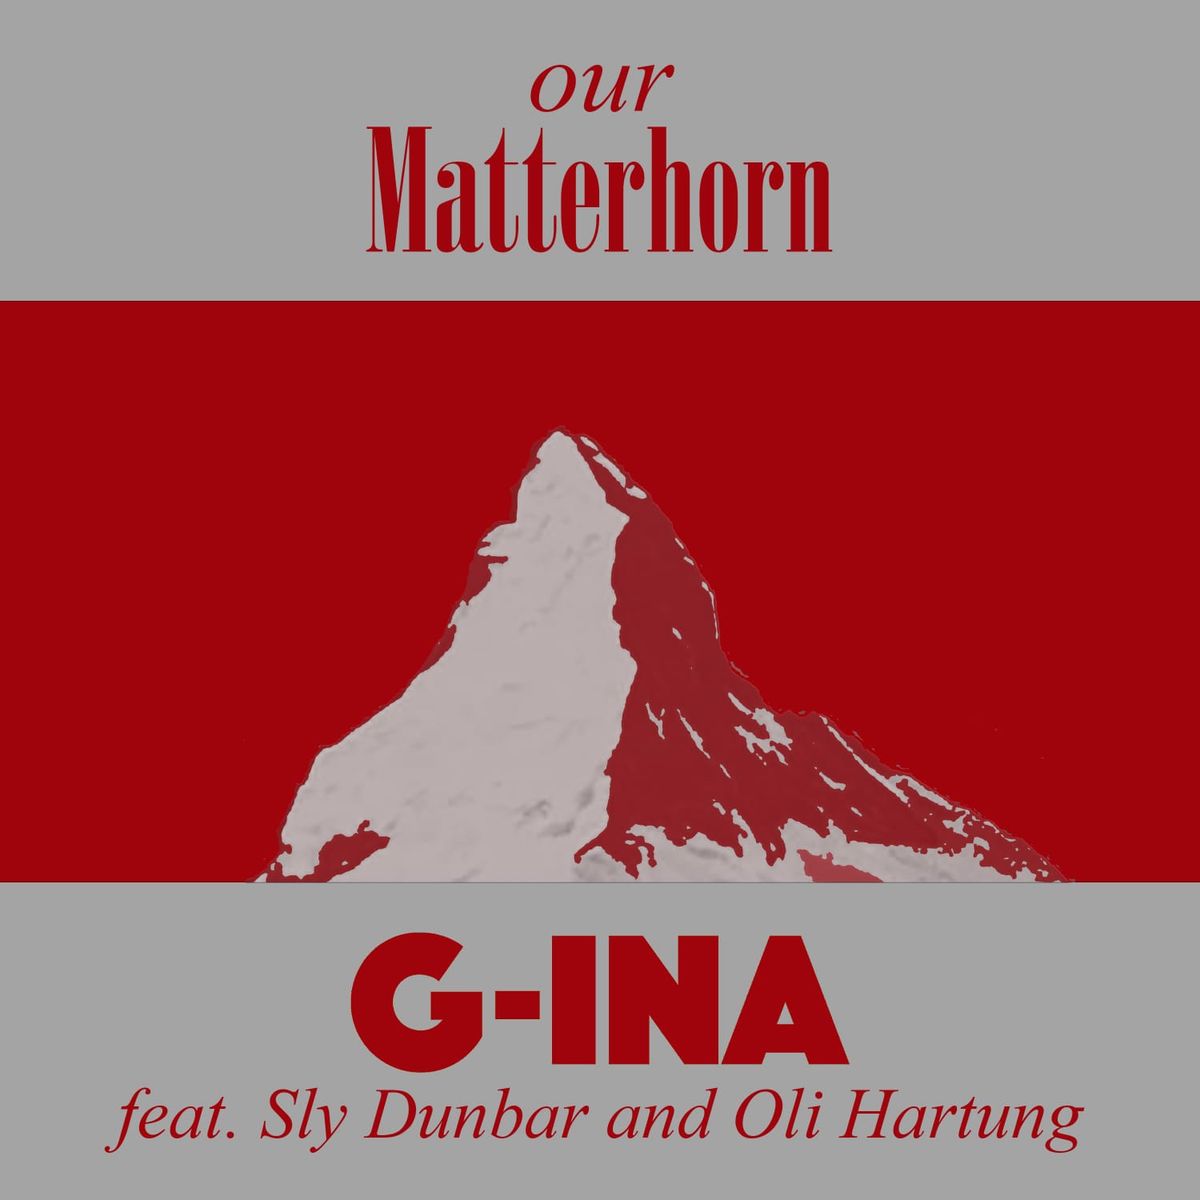 G-INA Presents: "Our Matterhorn" Video Release